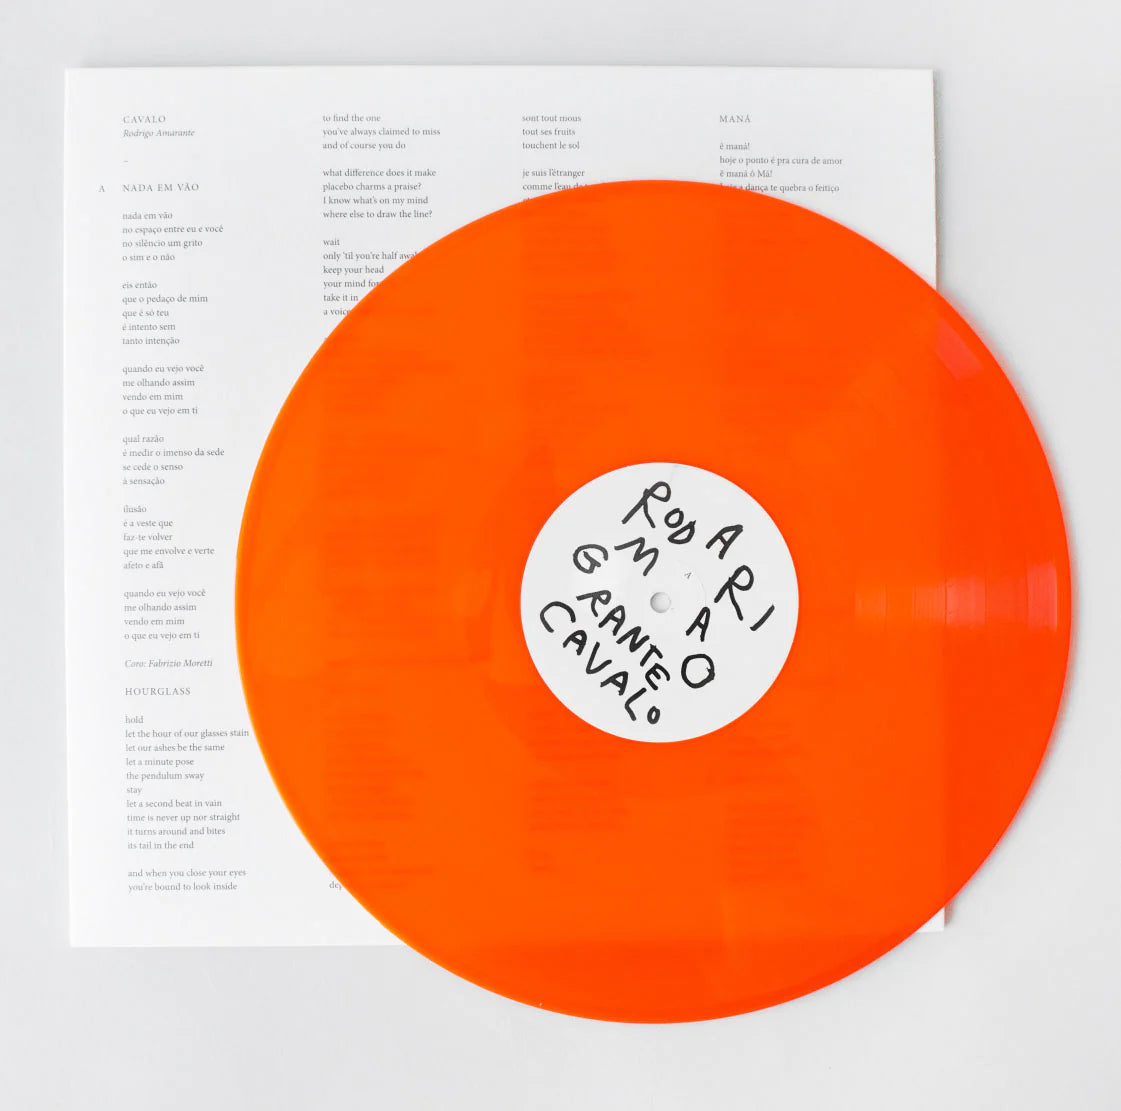 Rodrigo Amarante - Cavalo "Reissue" (Limited Edition on Neon Orange Vinyl)